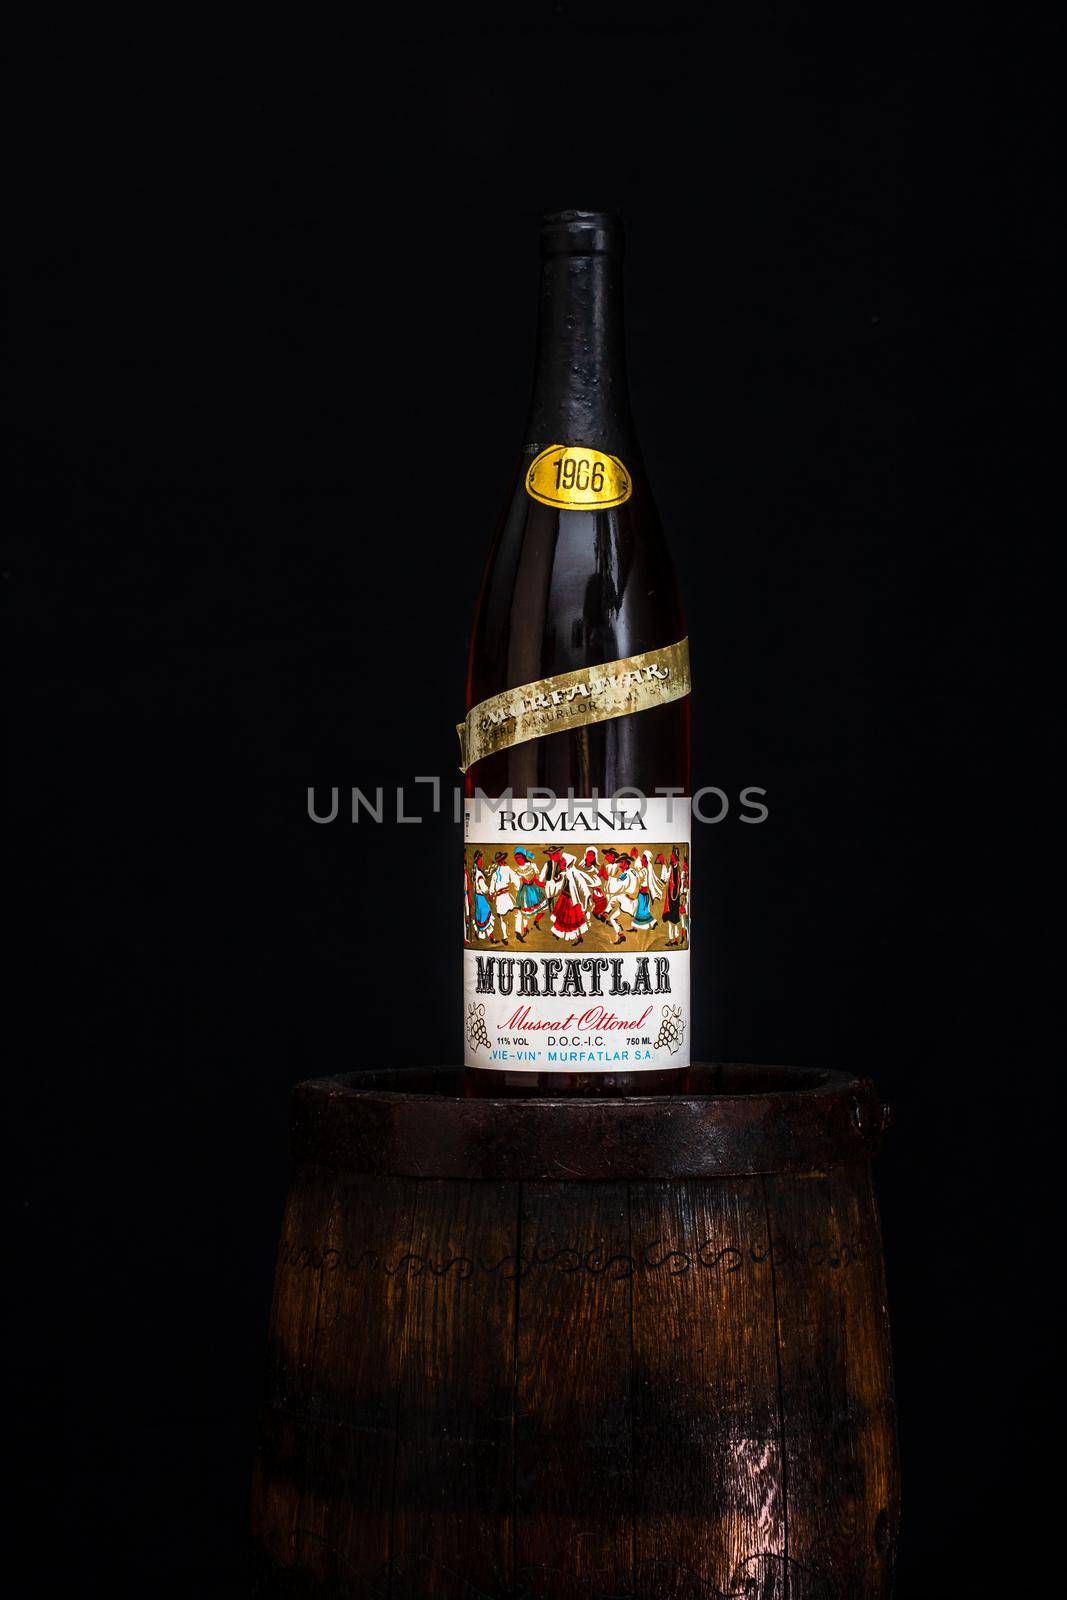 Vintage Murfatlar wine bottle on wooden barrel with dark background. Illustrative editorial photo Bucharest, Romania, 2021